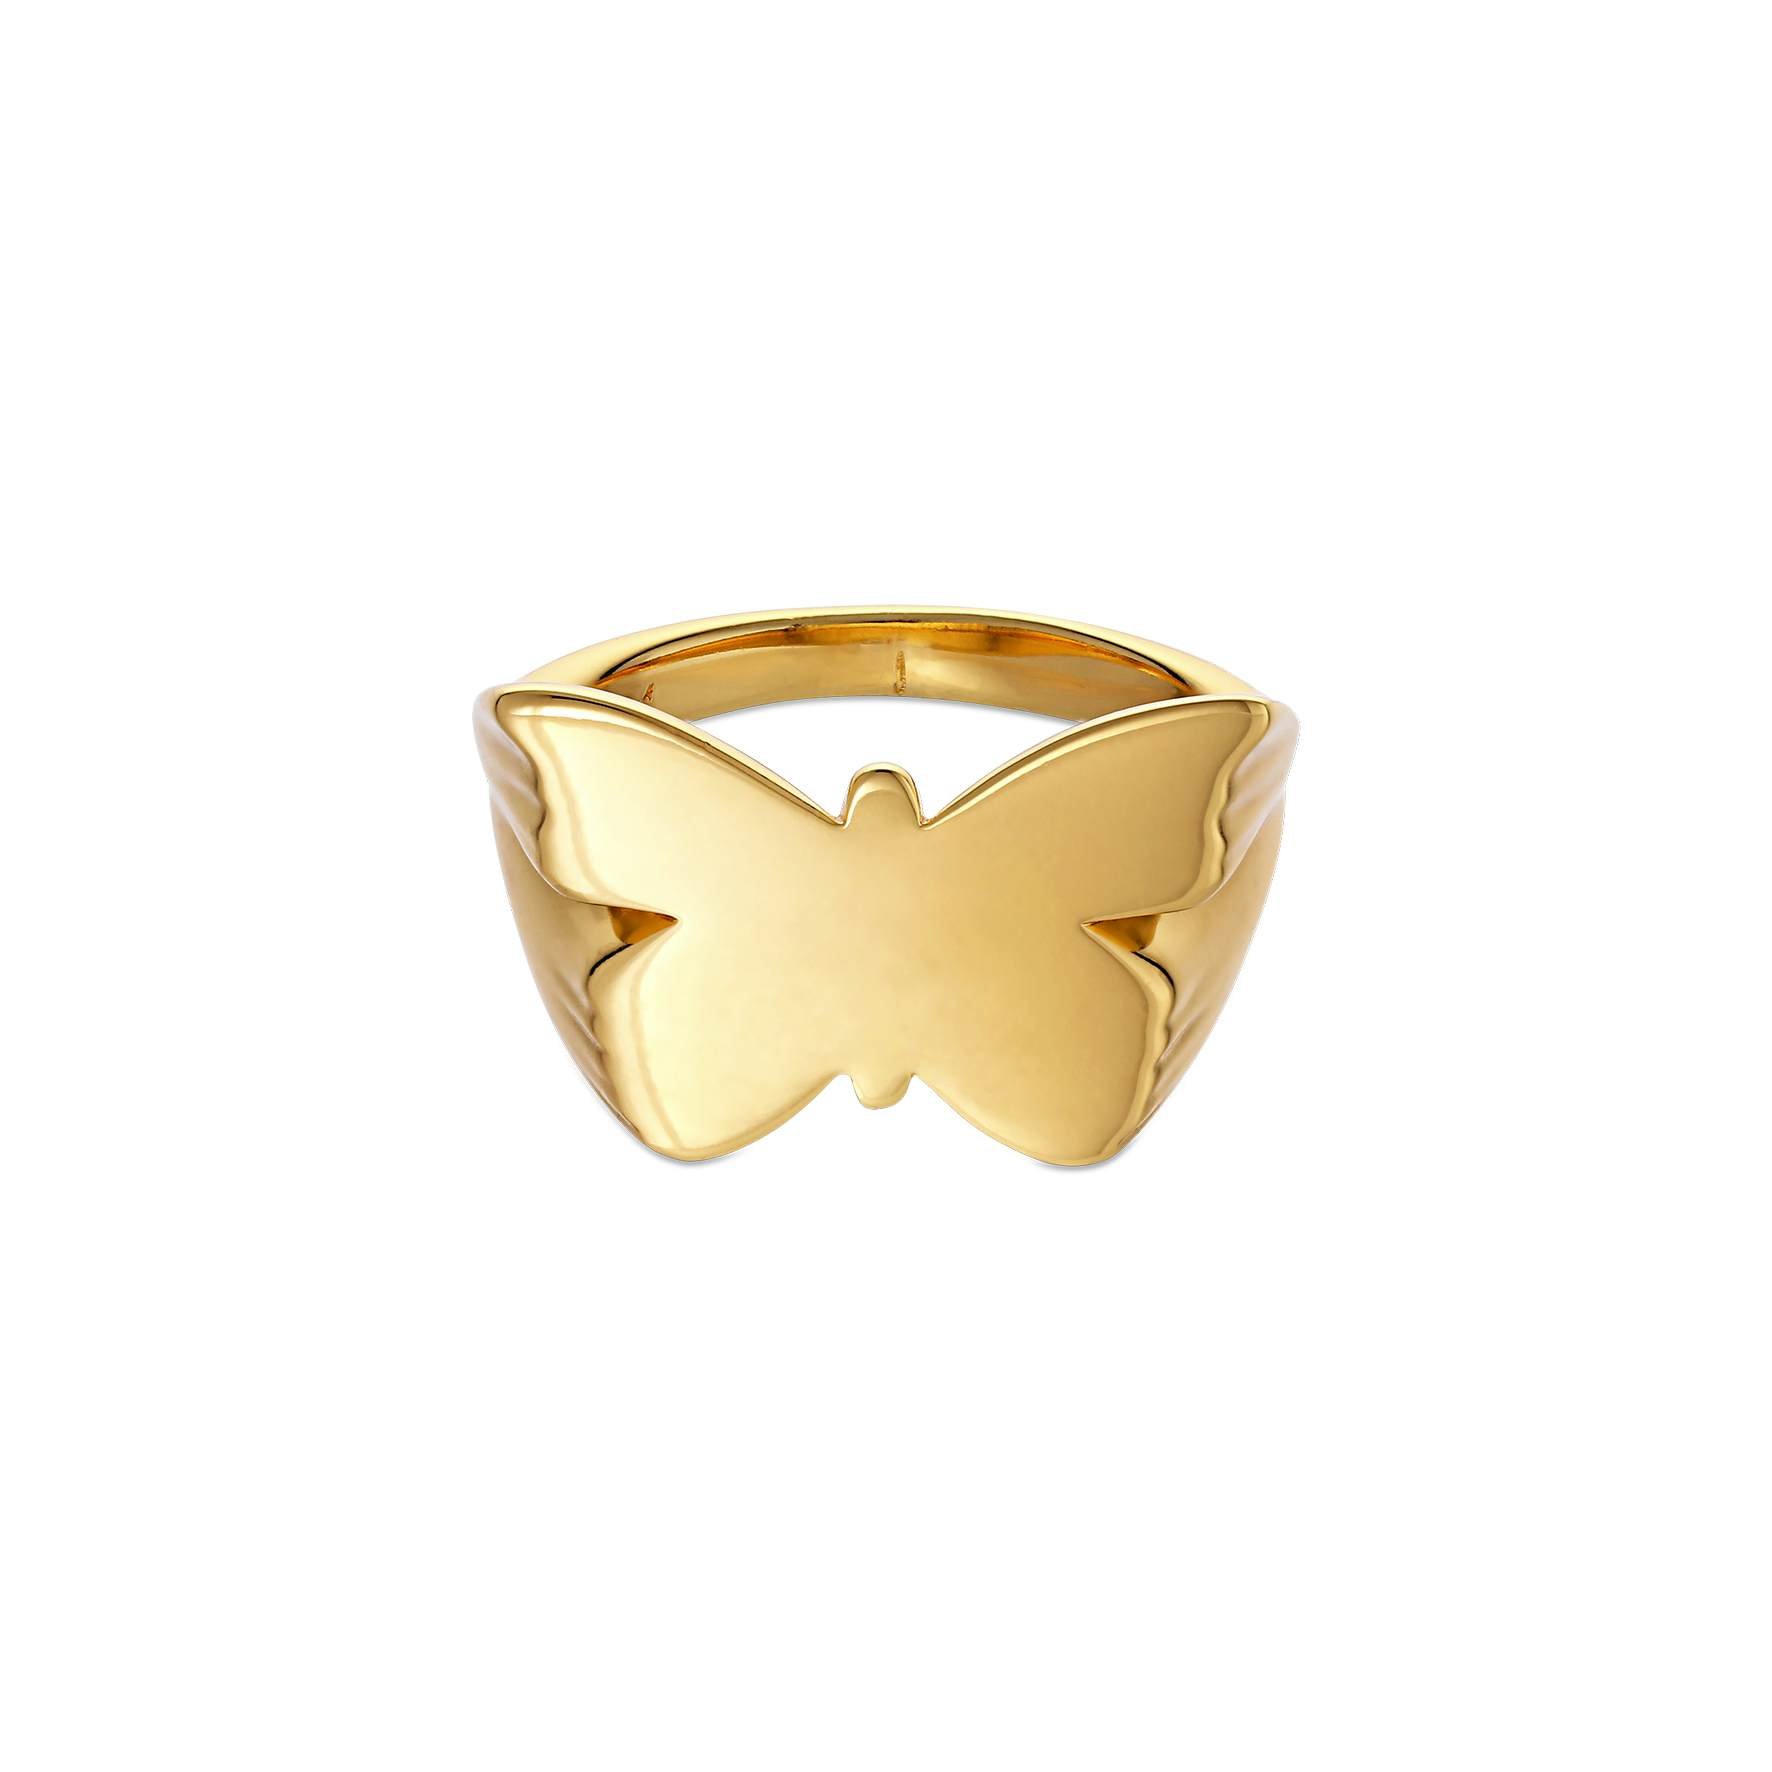 Butterfly Signet Ring von Jane Kønig in Vergoldet-Silber Sterling 925